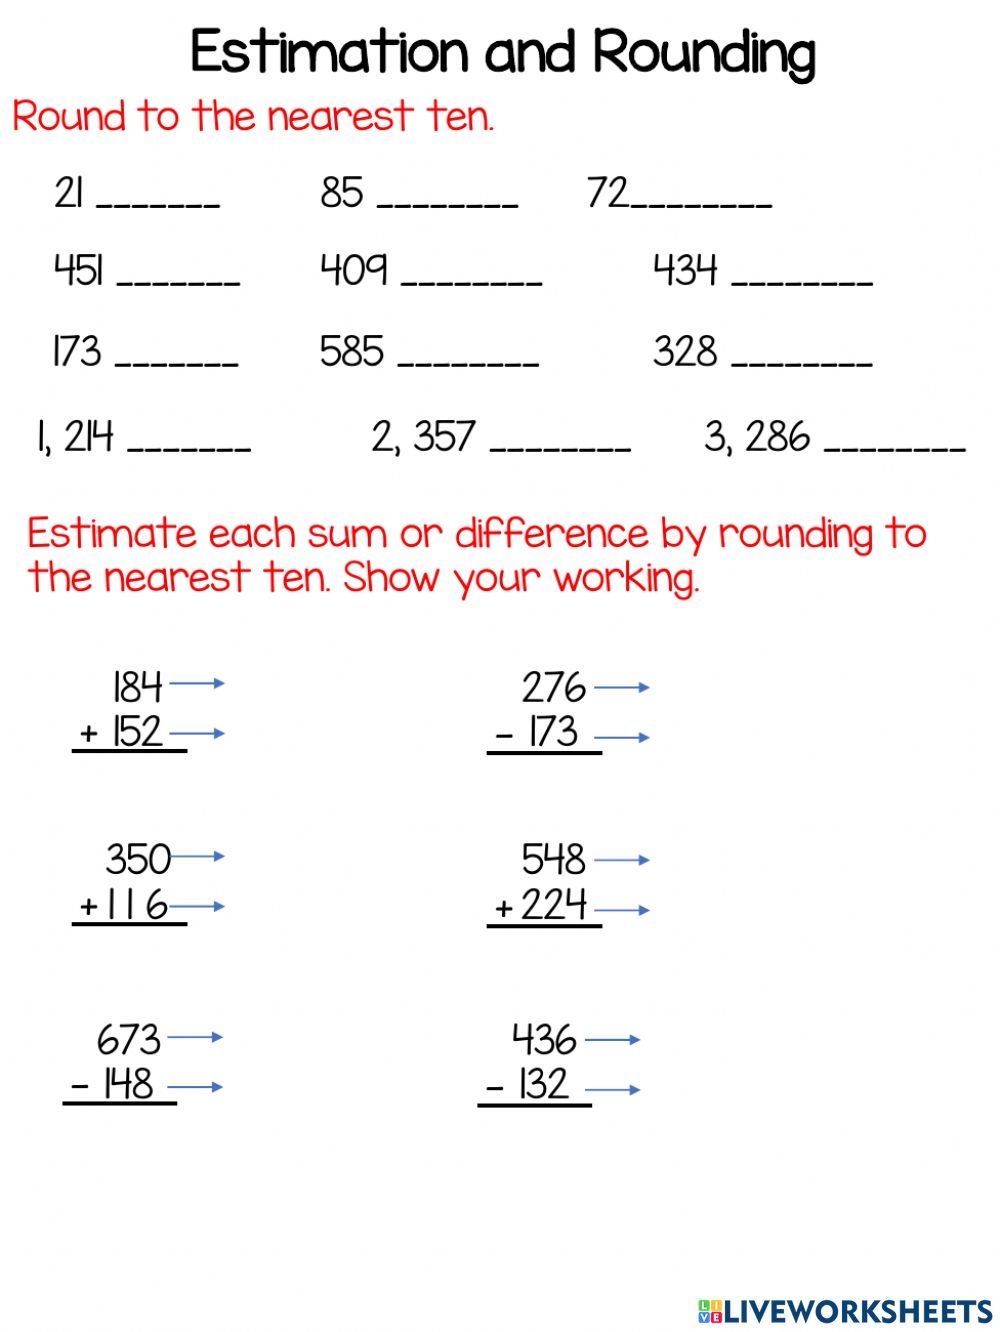 rounding-and-estimation-worksheet-math-worksheet-answers